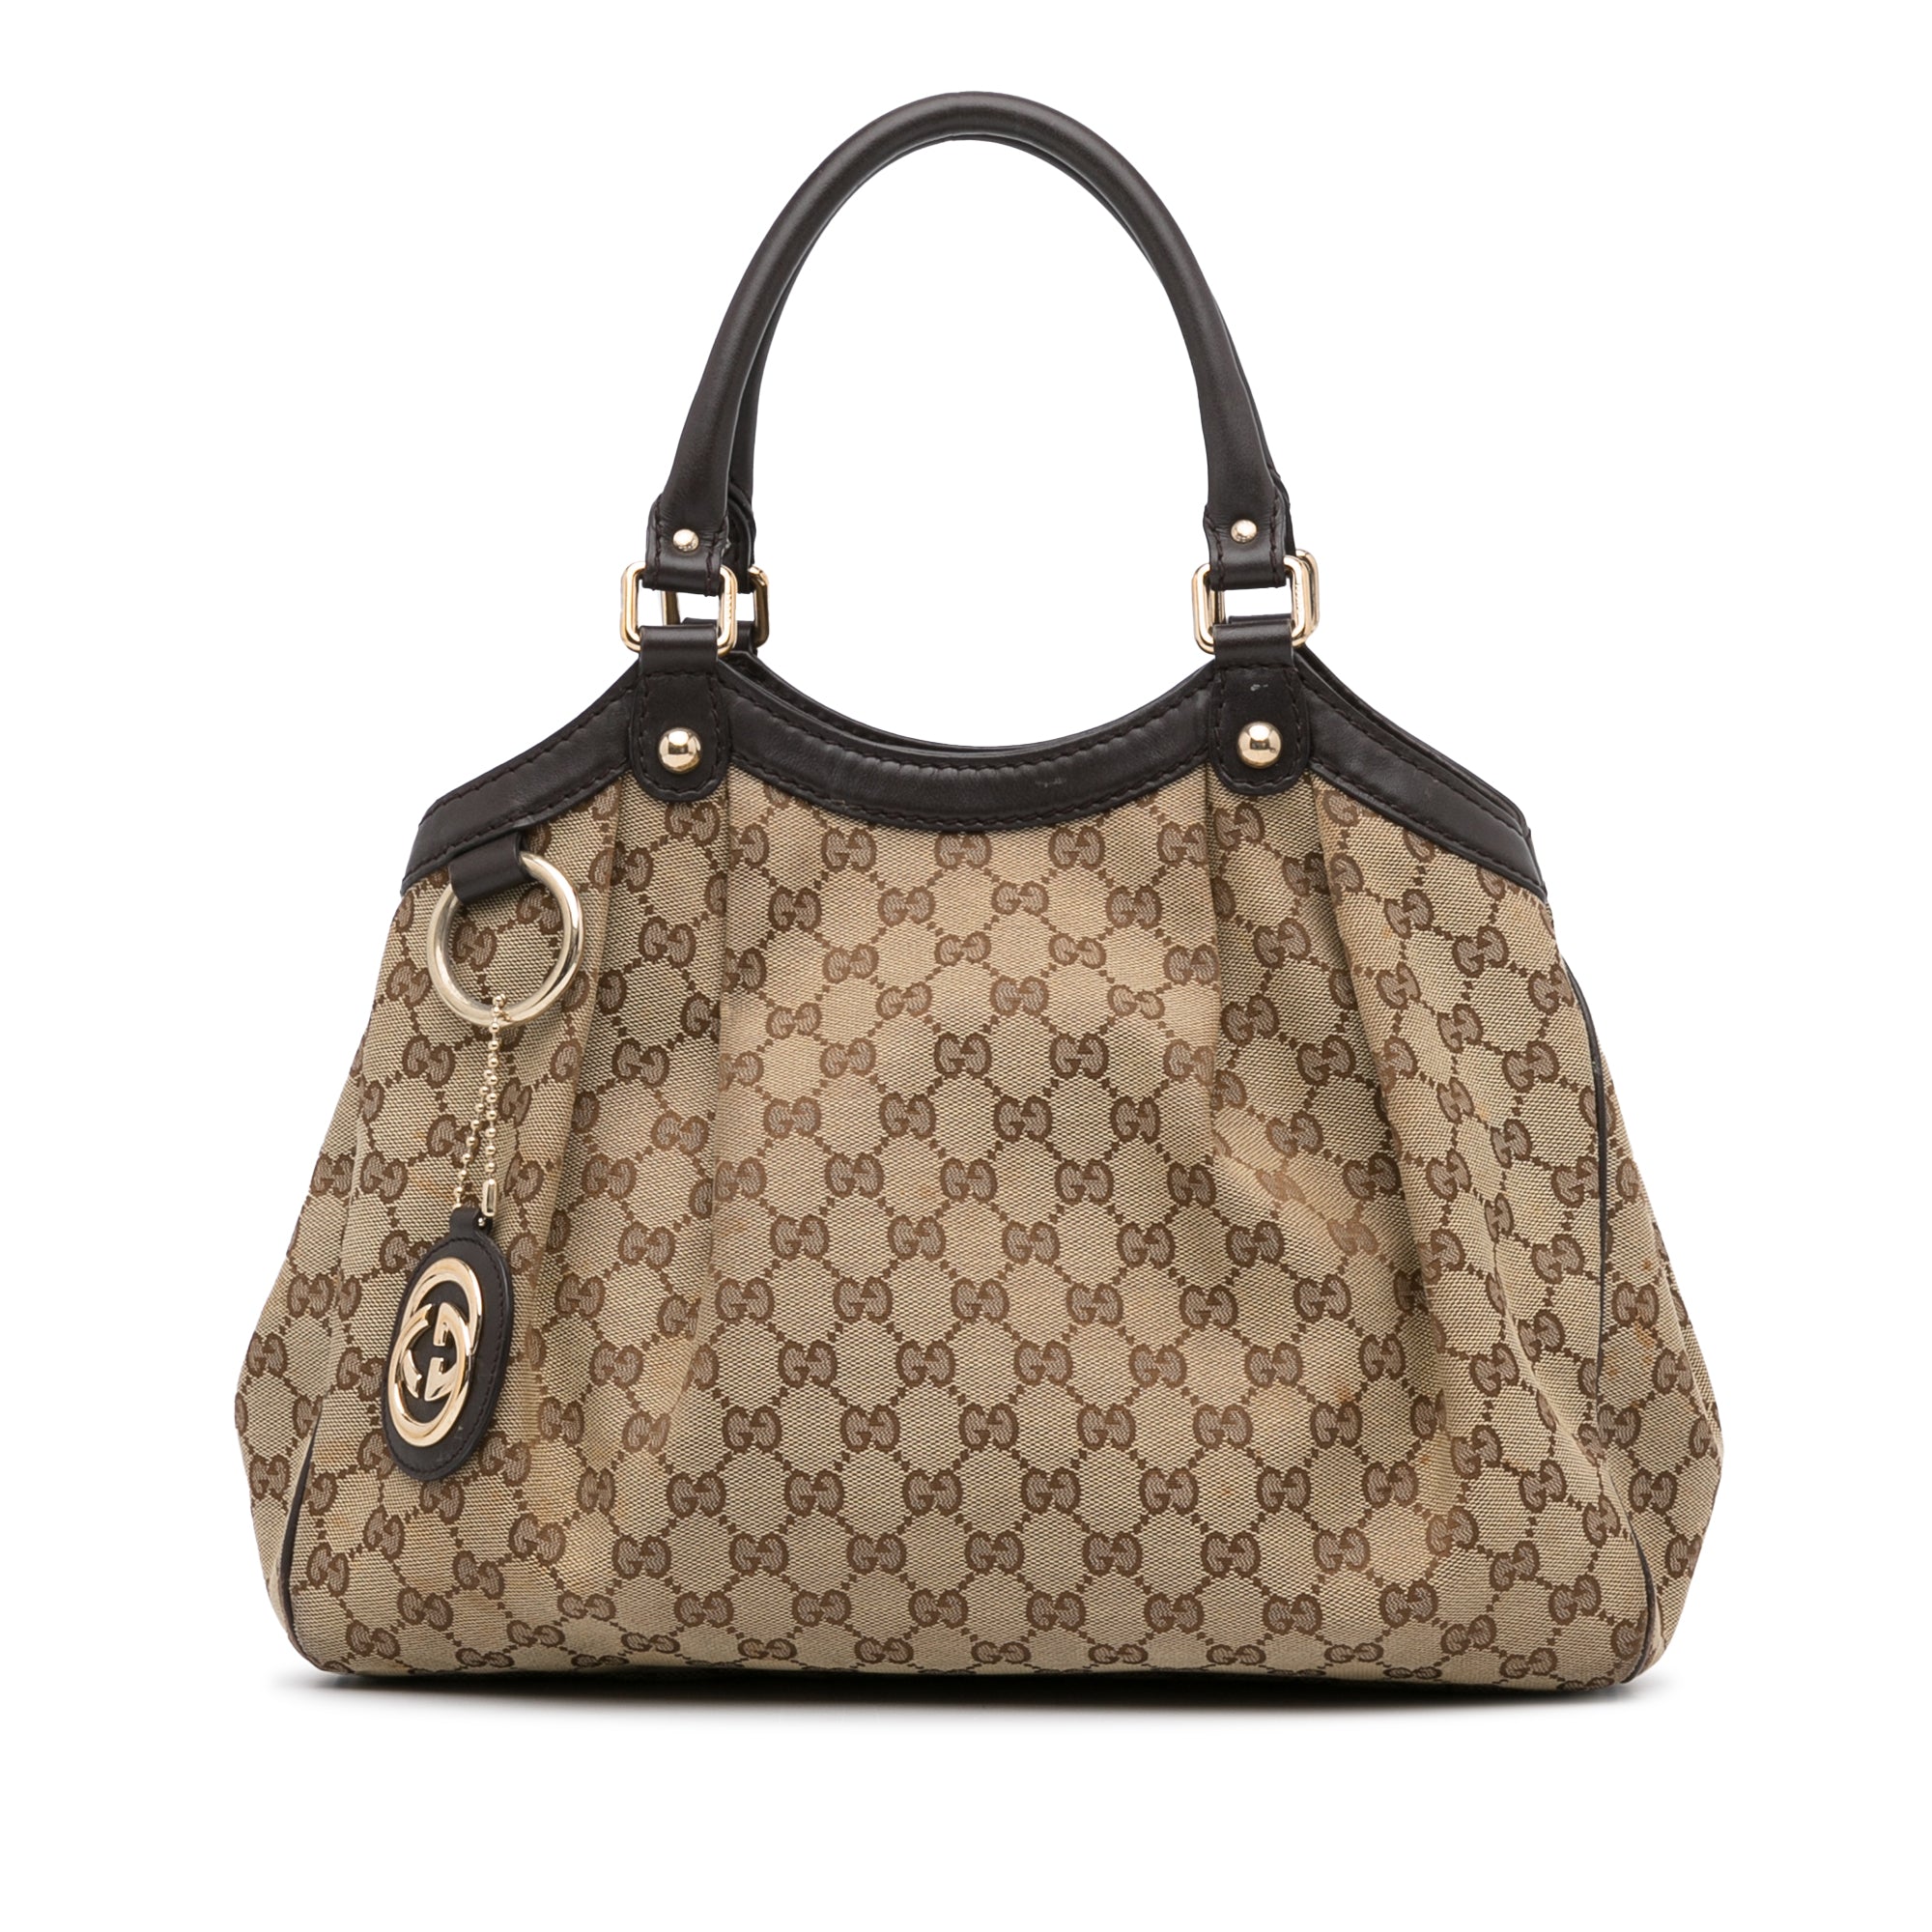 Gucci Authenticated Sukey Handbag